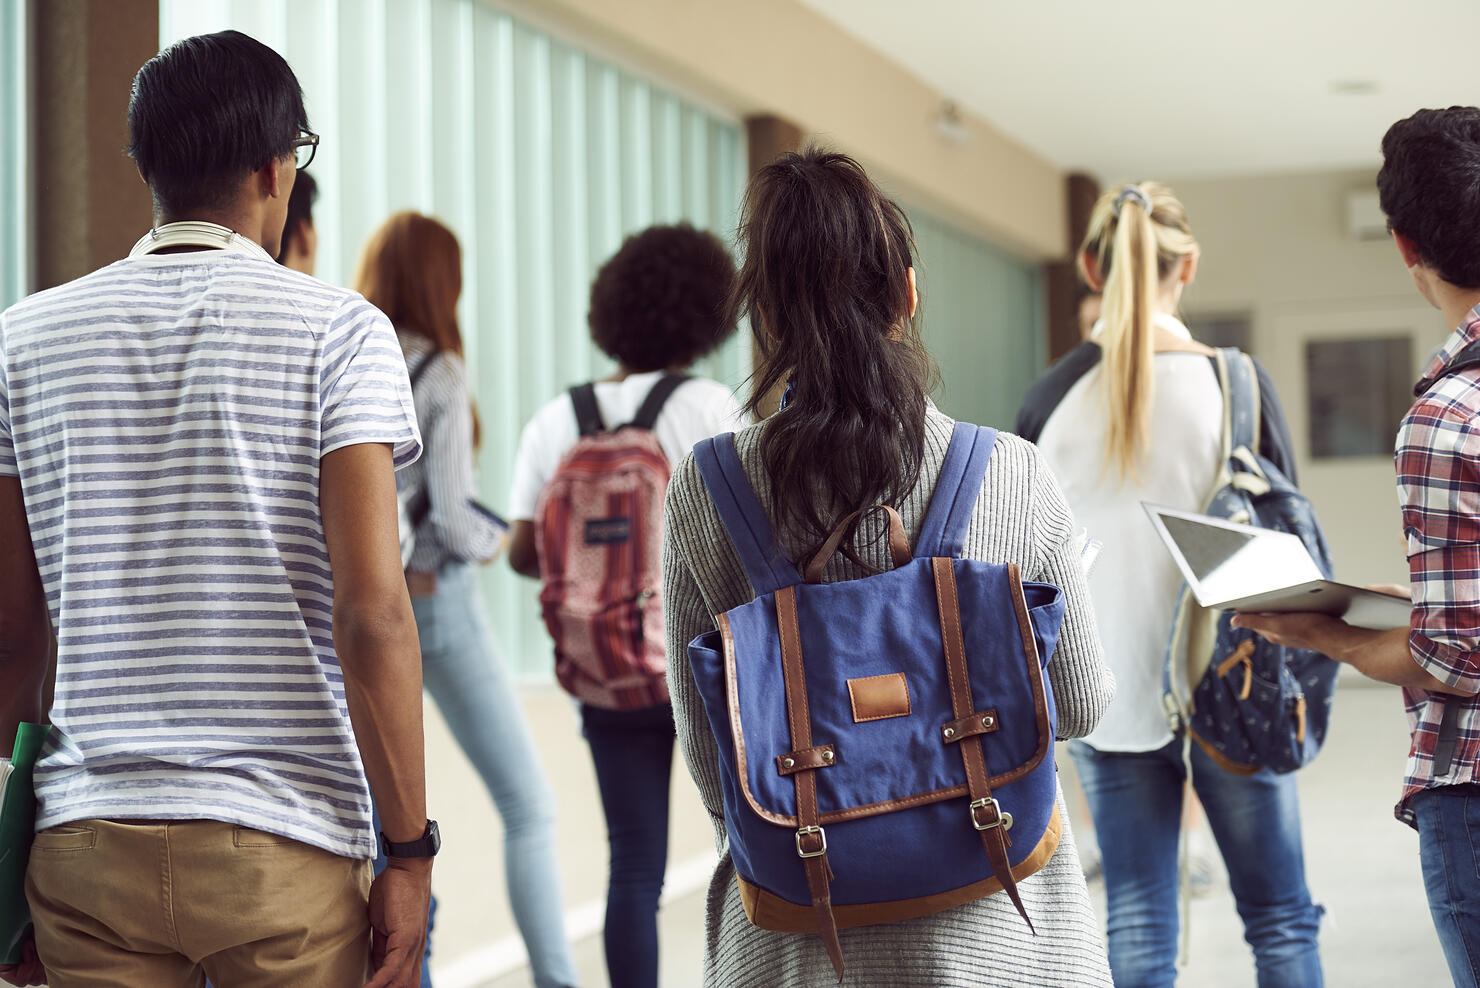 Students walking in school corridor, rear view